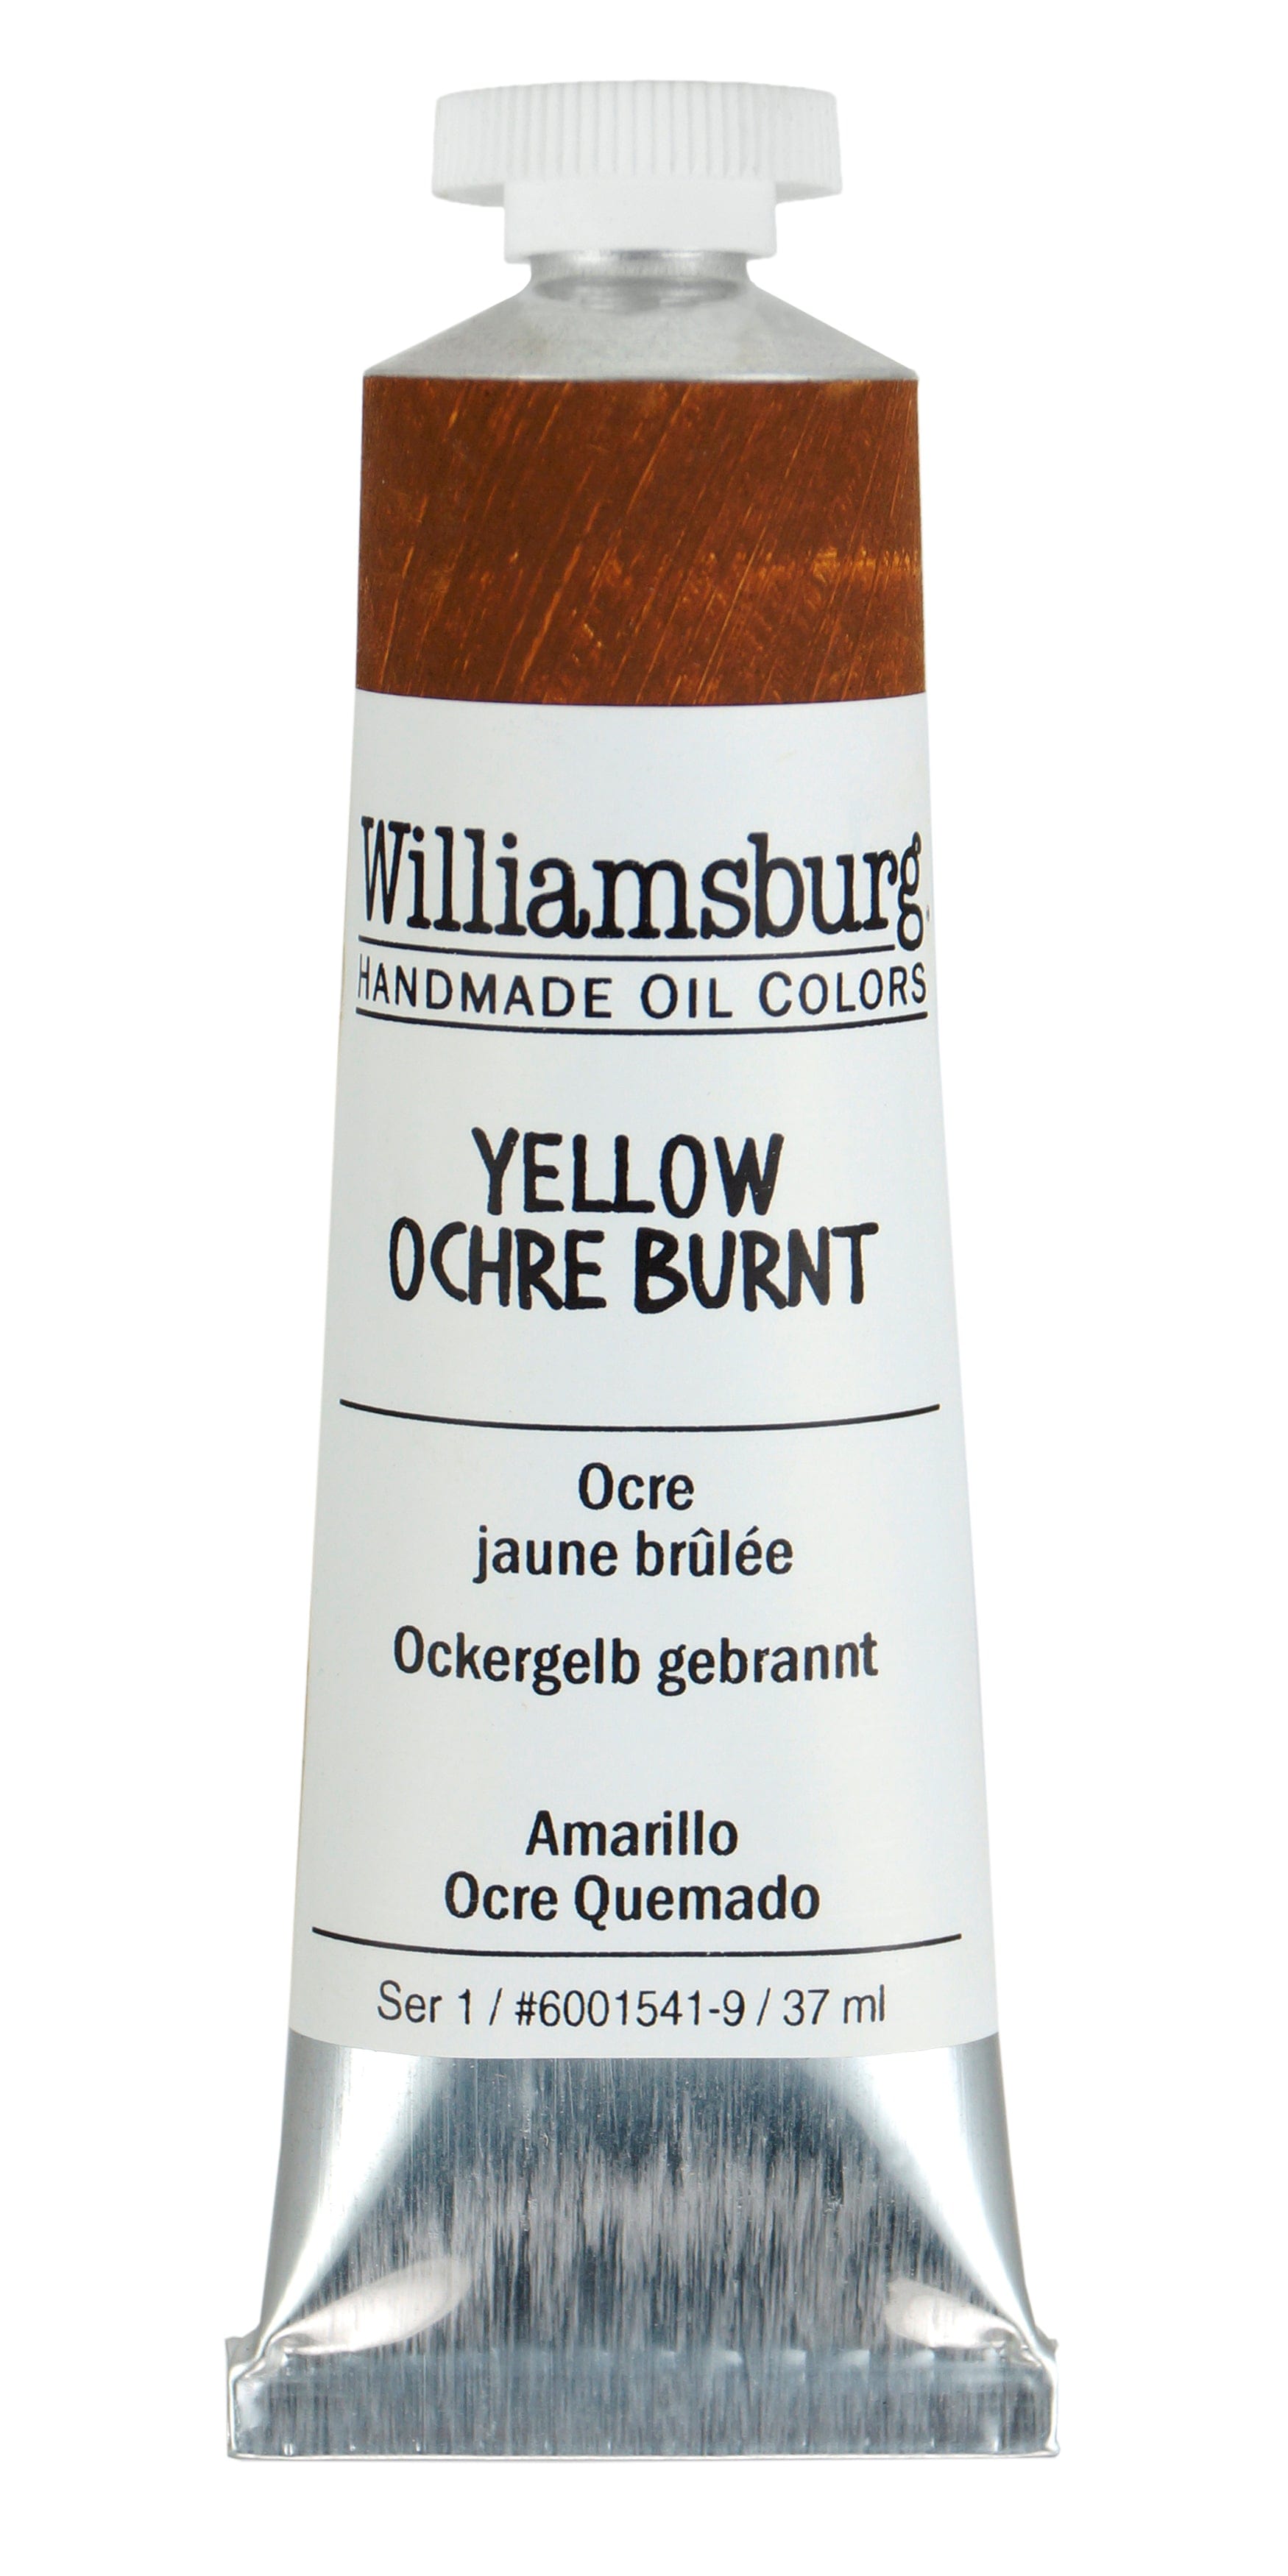 Williamsburg Oliemaling Yellow Ochre Burnt